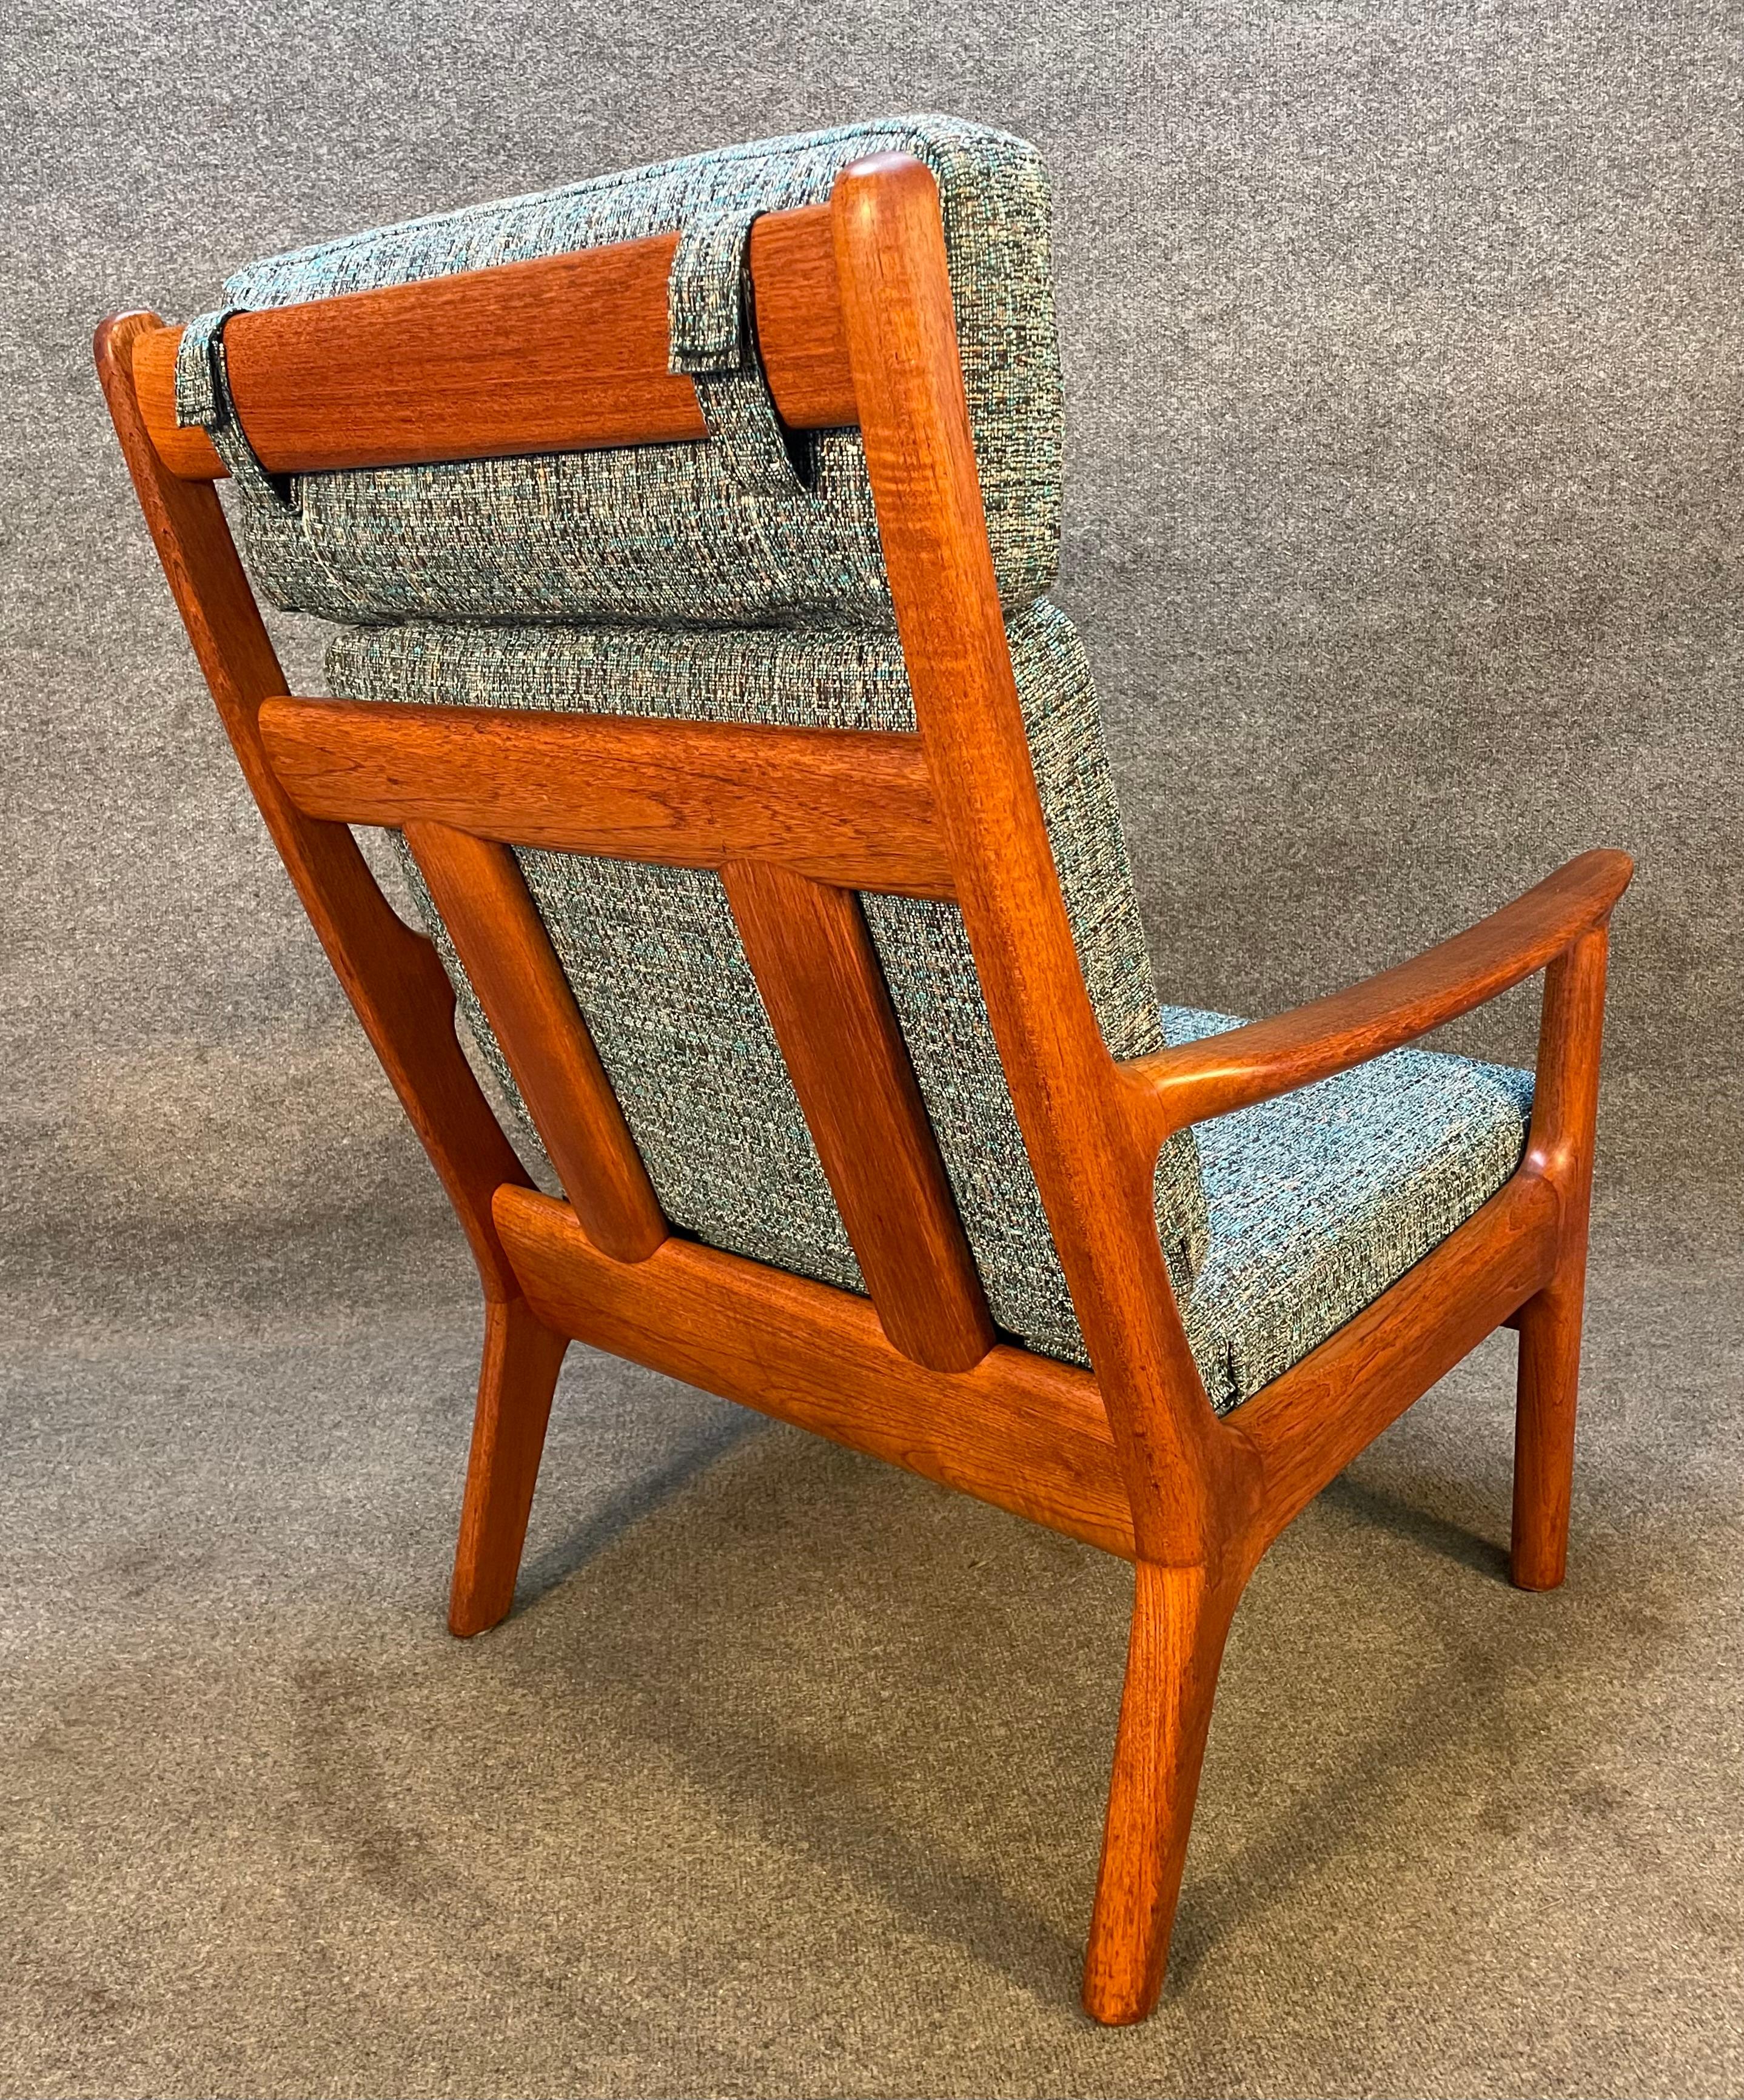 Vintage Danish Mid-Century Teak Lounge Chair Attributed to Ole Wanscher 1